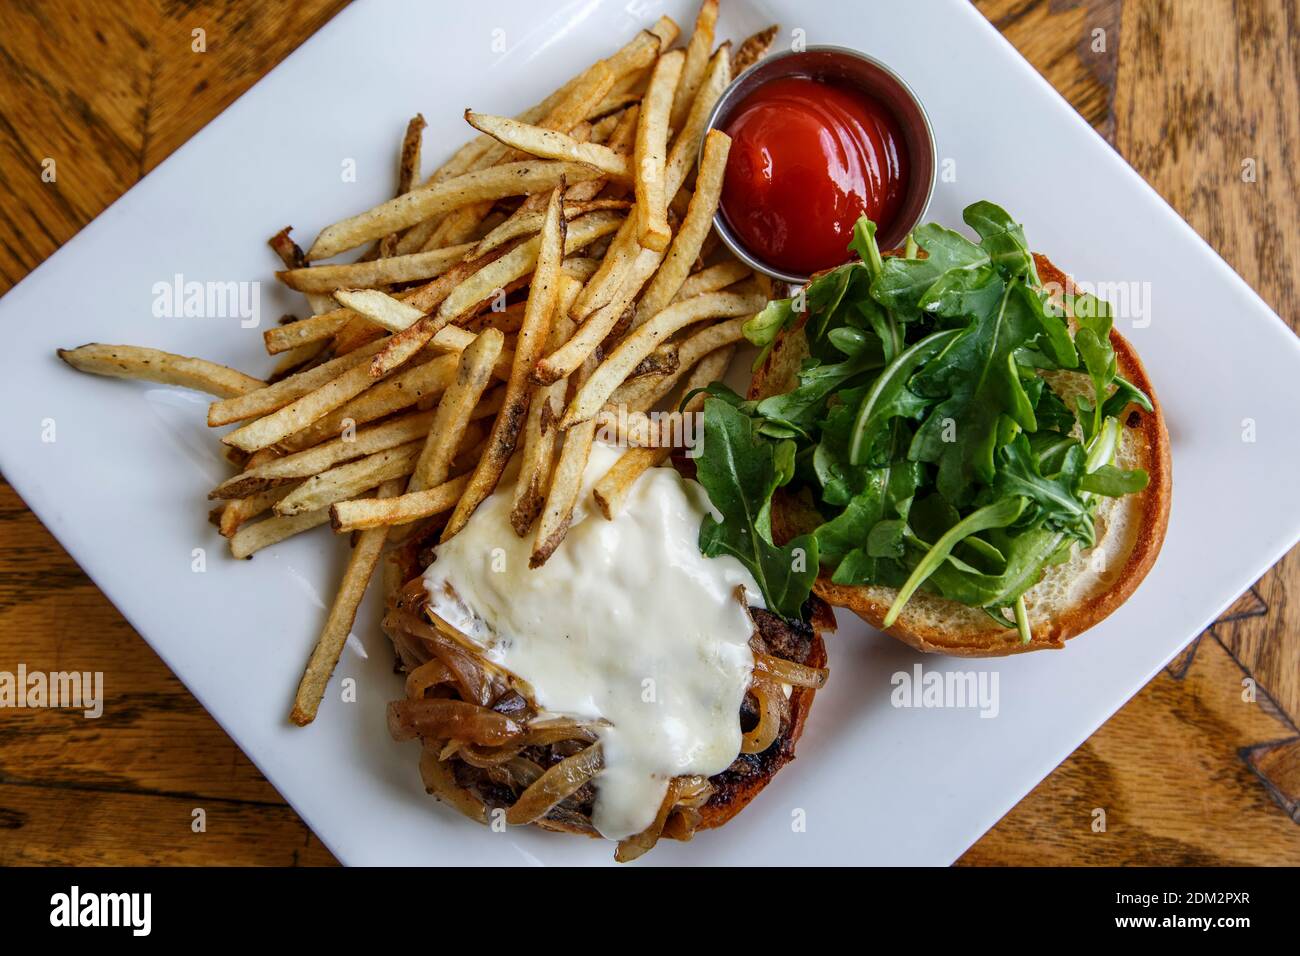 Bison Bistro Burger and fries, Dining Hall, Chautauqua Park, Boulder, Colorado USA Stock Photo